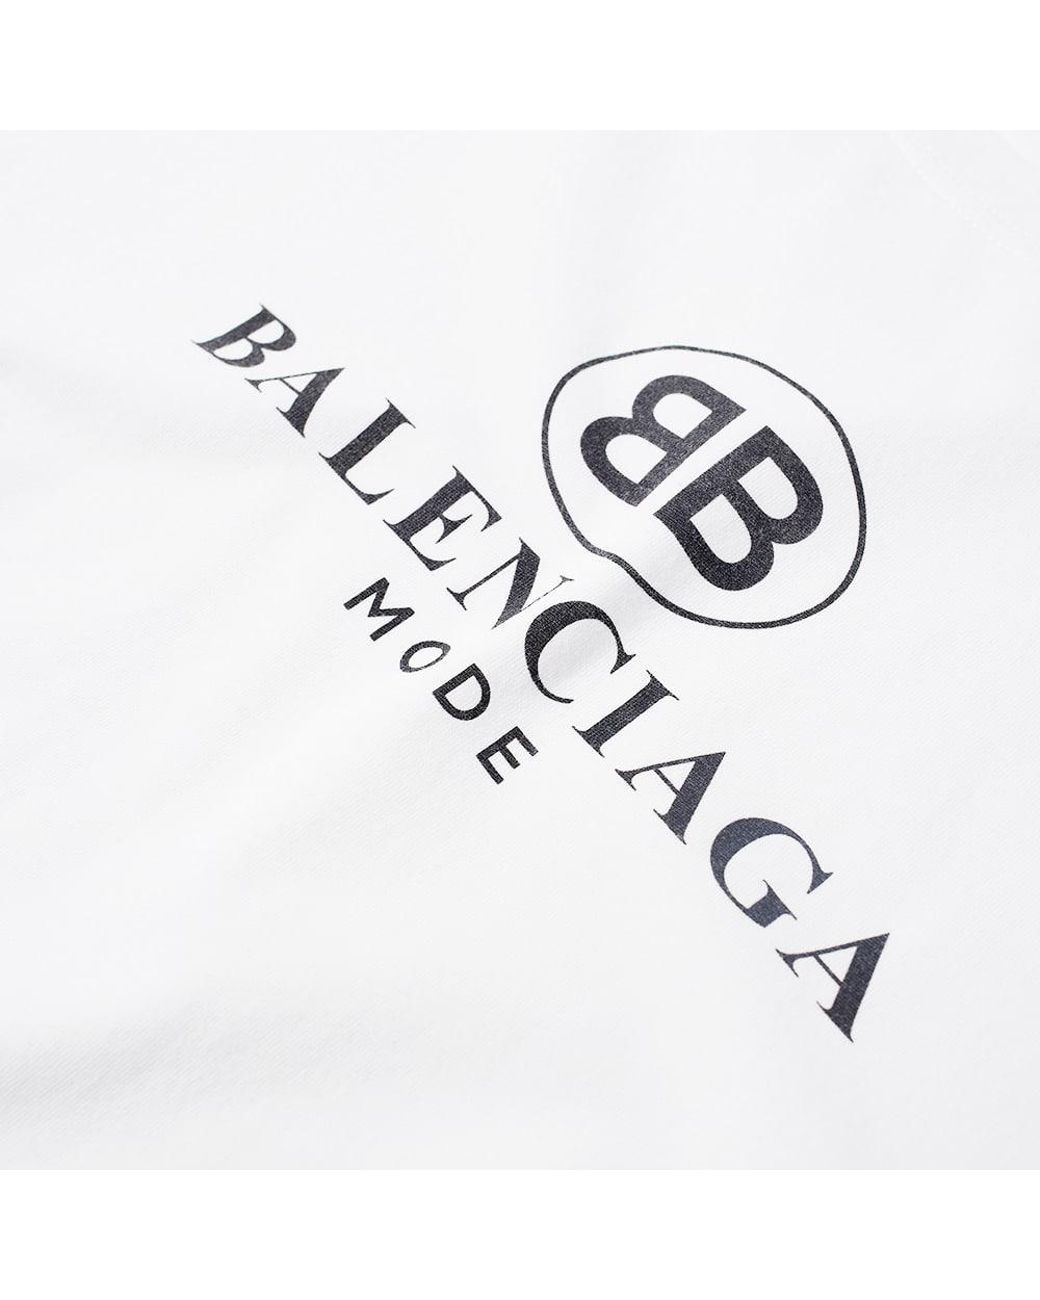 Balenciaga Cotton Bb Mode T-shirt in White for Men | Lyst